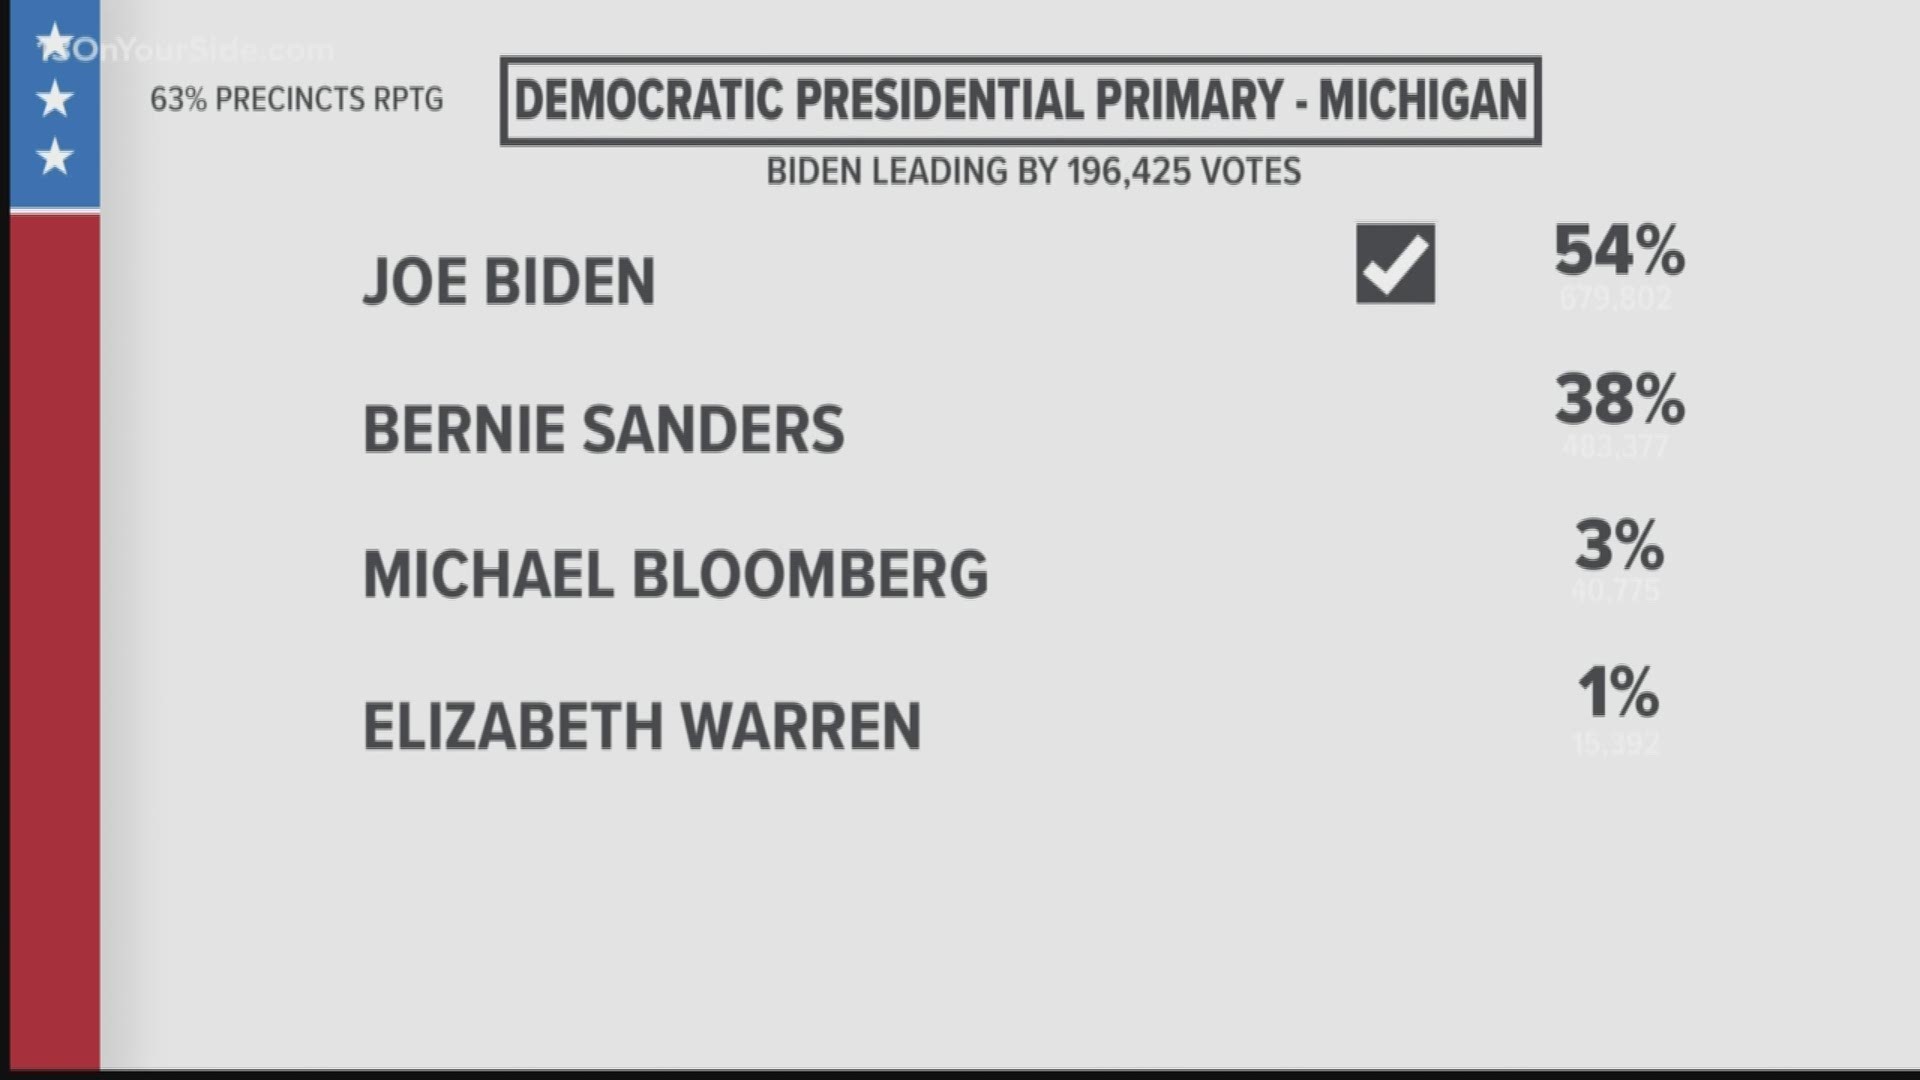 The win adds to Biden's delegate advantage over Sanders.